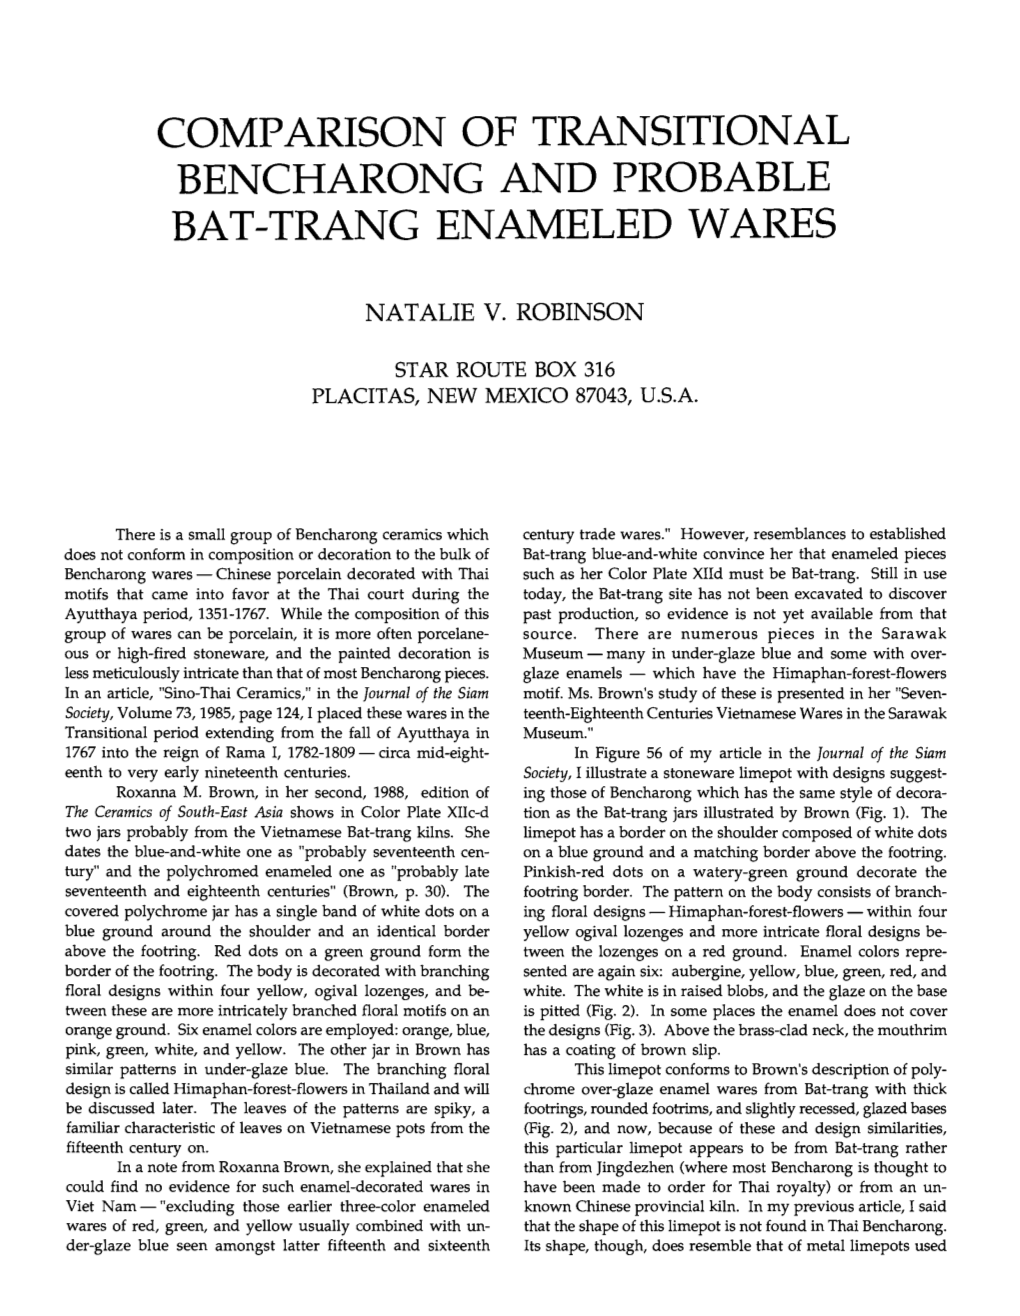 Comparison of Transitional Bencharong and Probable Bat-Trang Enameled Wares